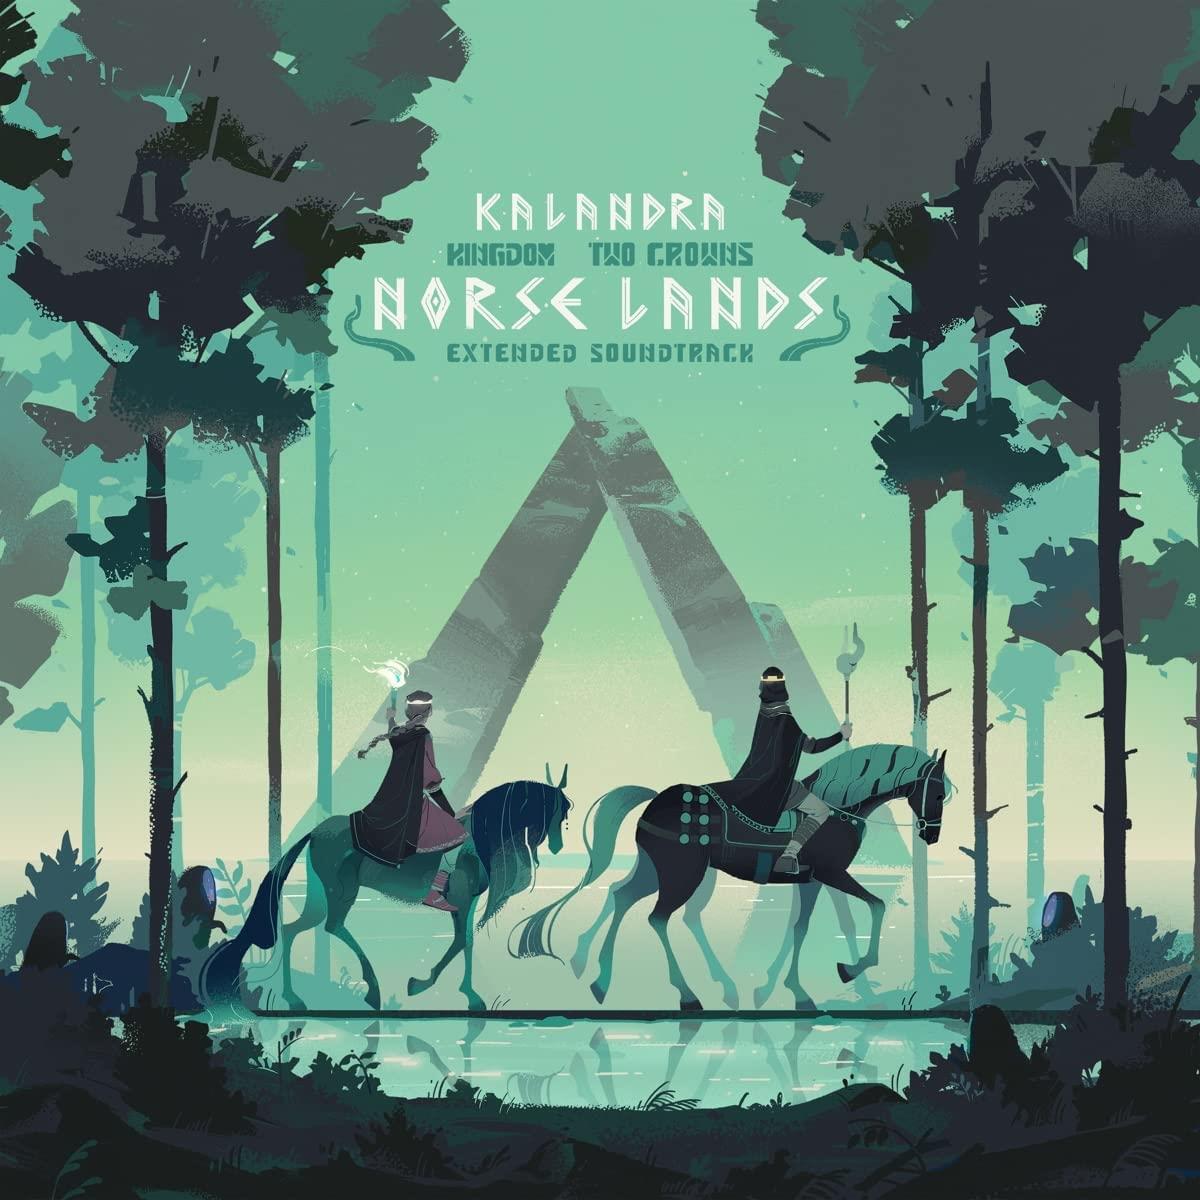 Kalandra - CD - Kingdom Two Crowns: Norse Lands